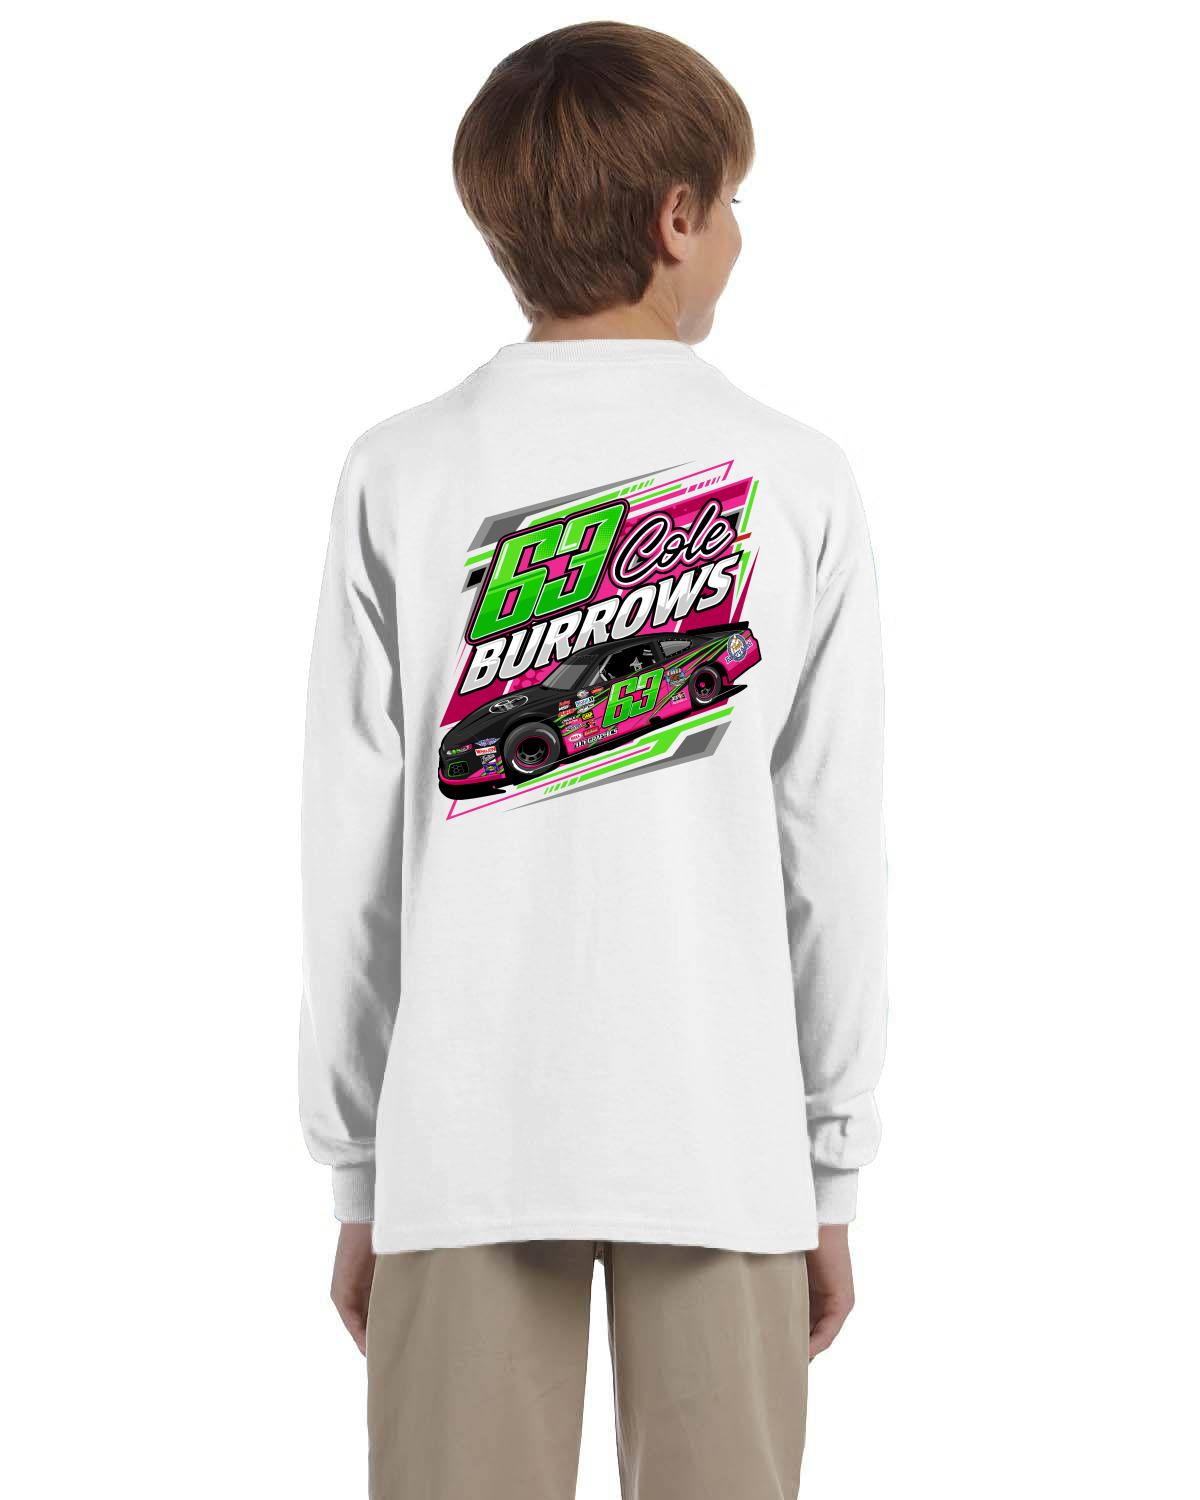 Cole Burrows Racing Youth Long-Sleeve T-Shirt